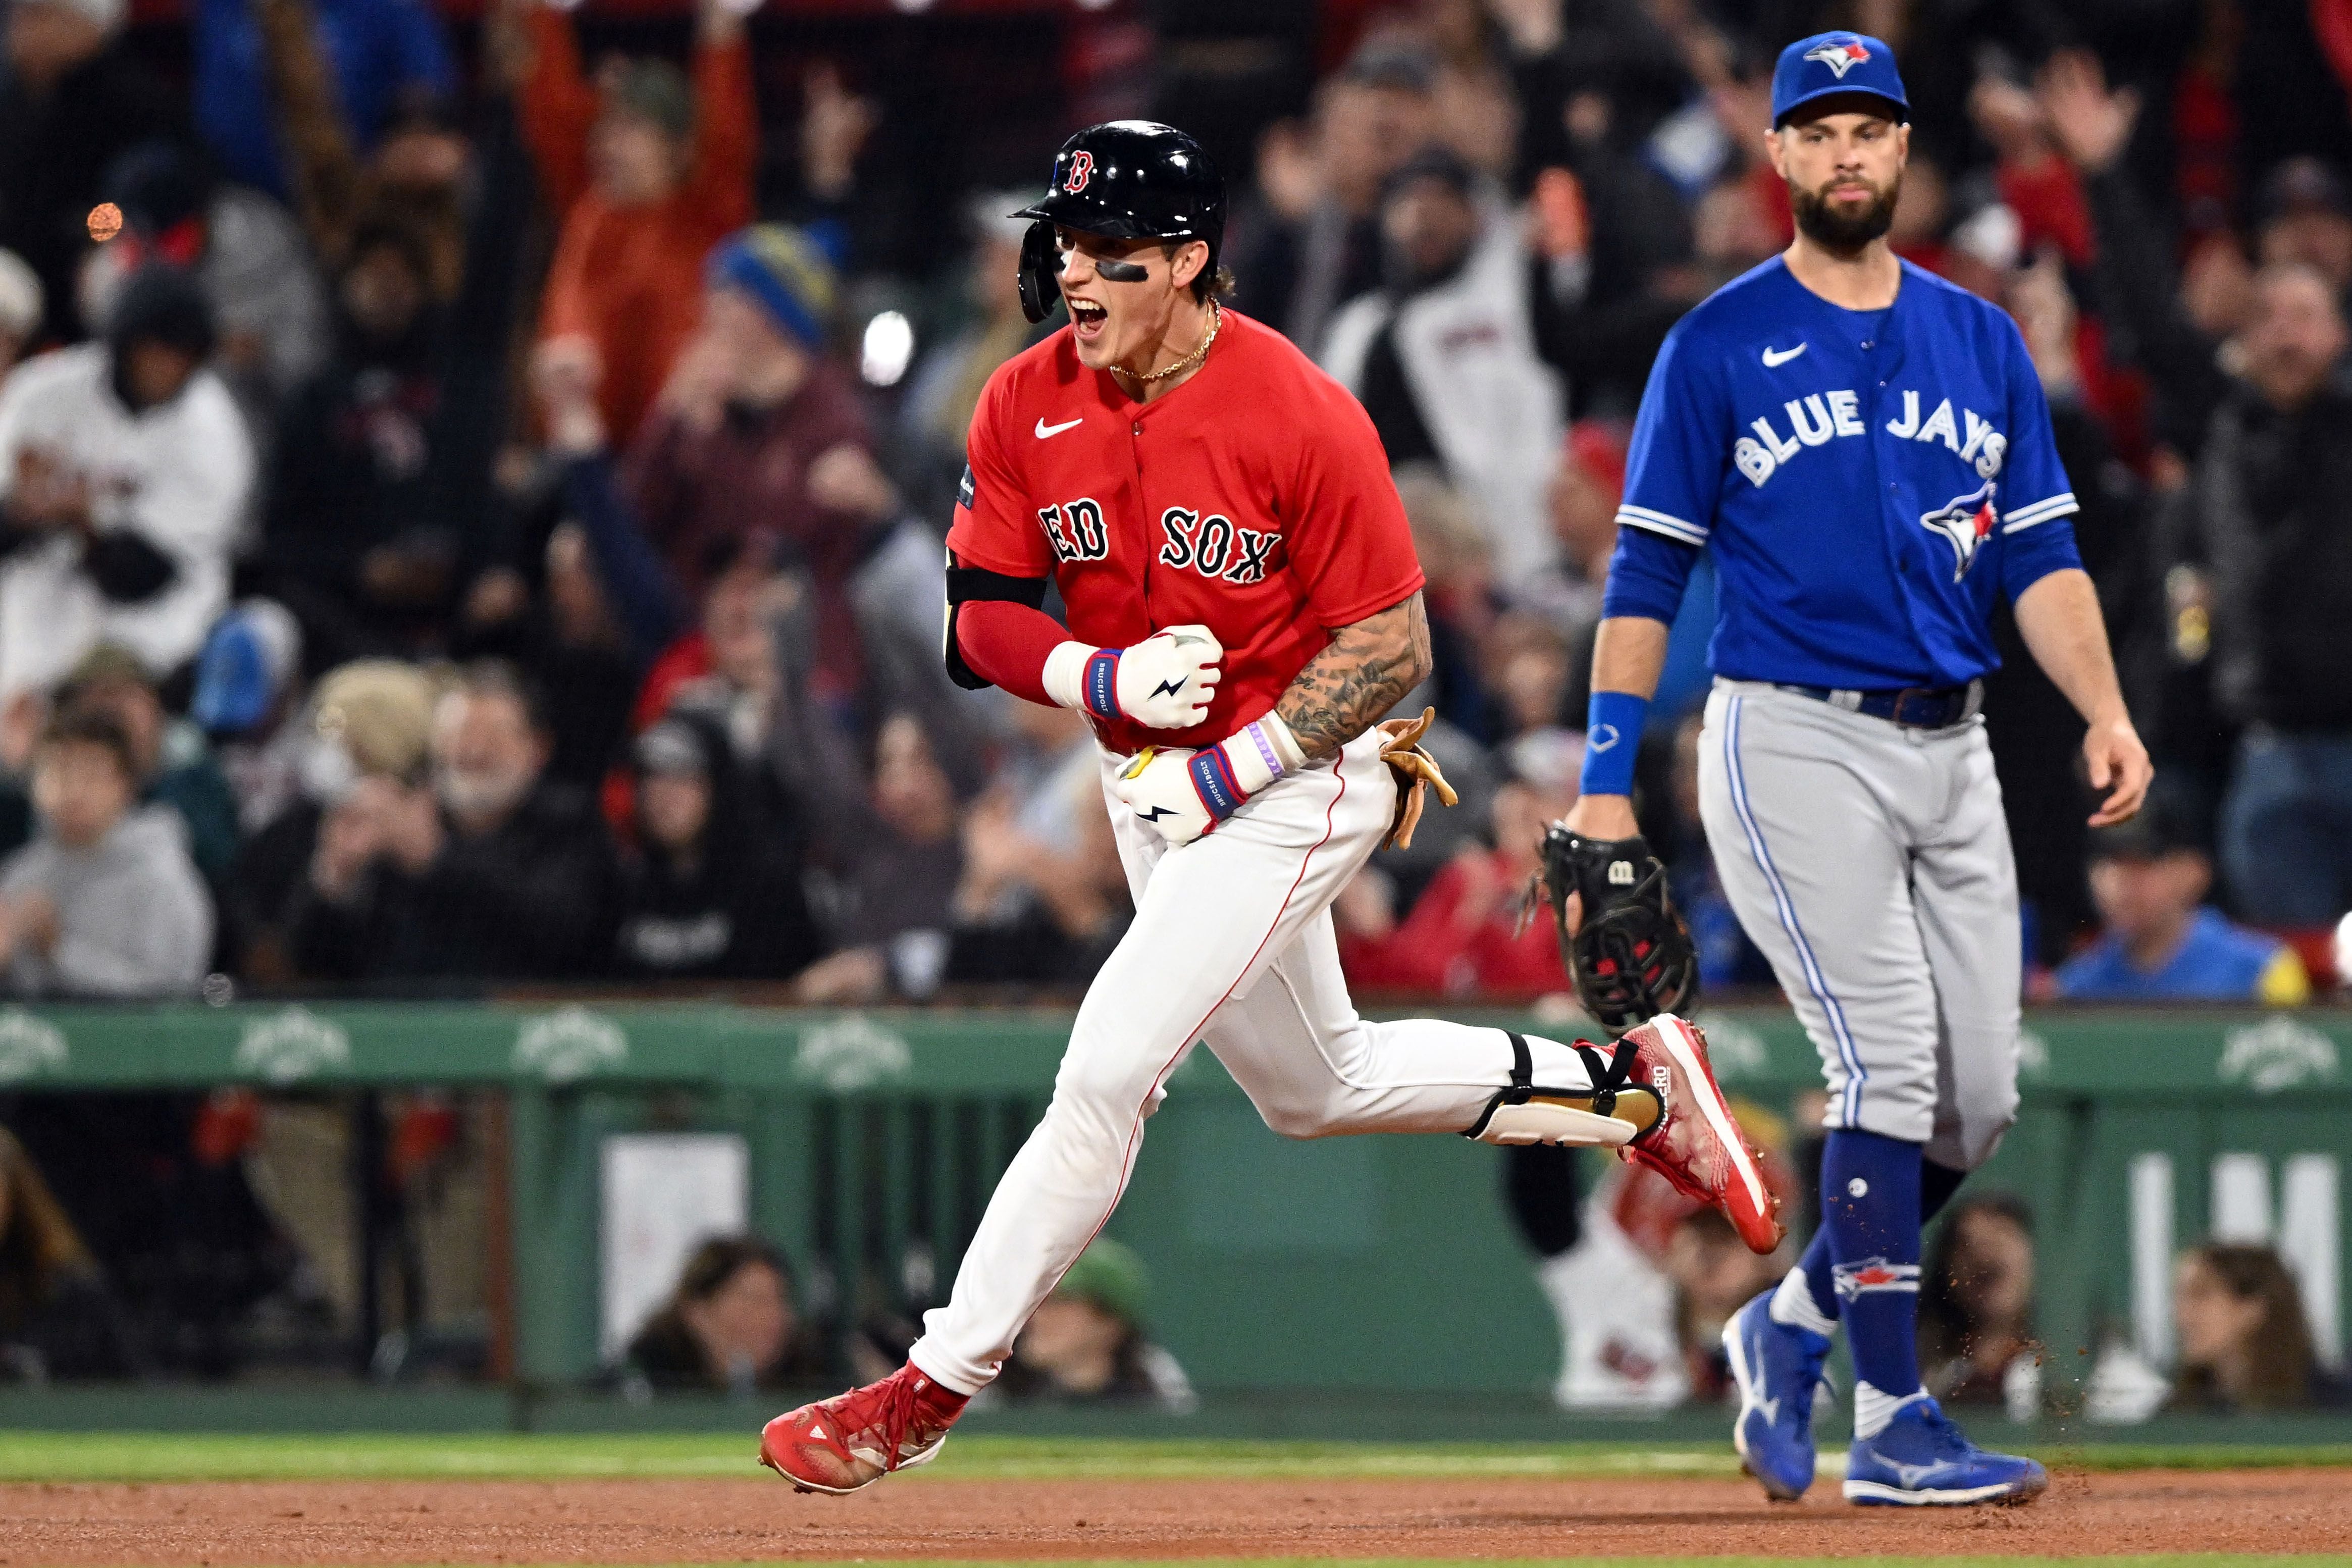 Alex Verdugo Player Props: Red Sox vs. Phillies